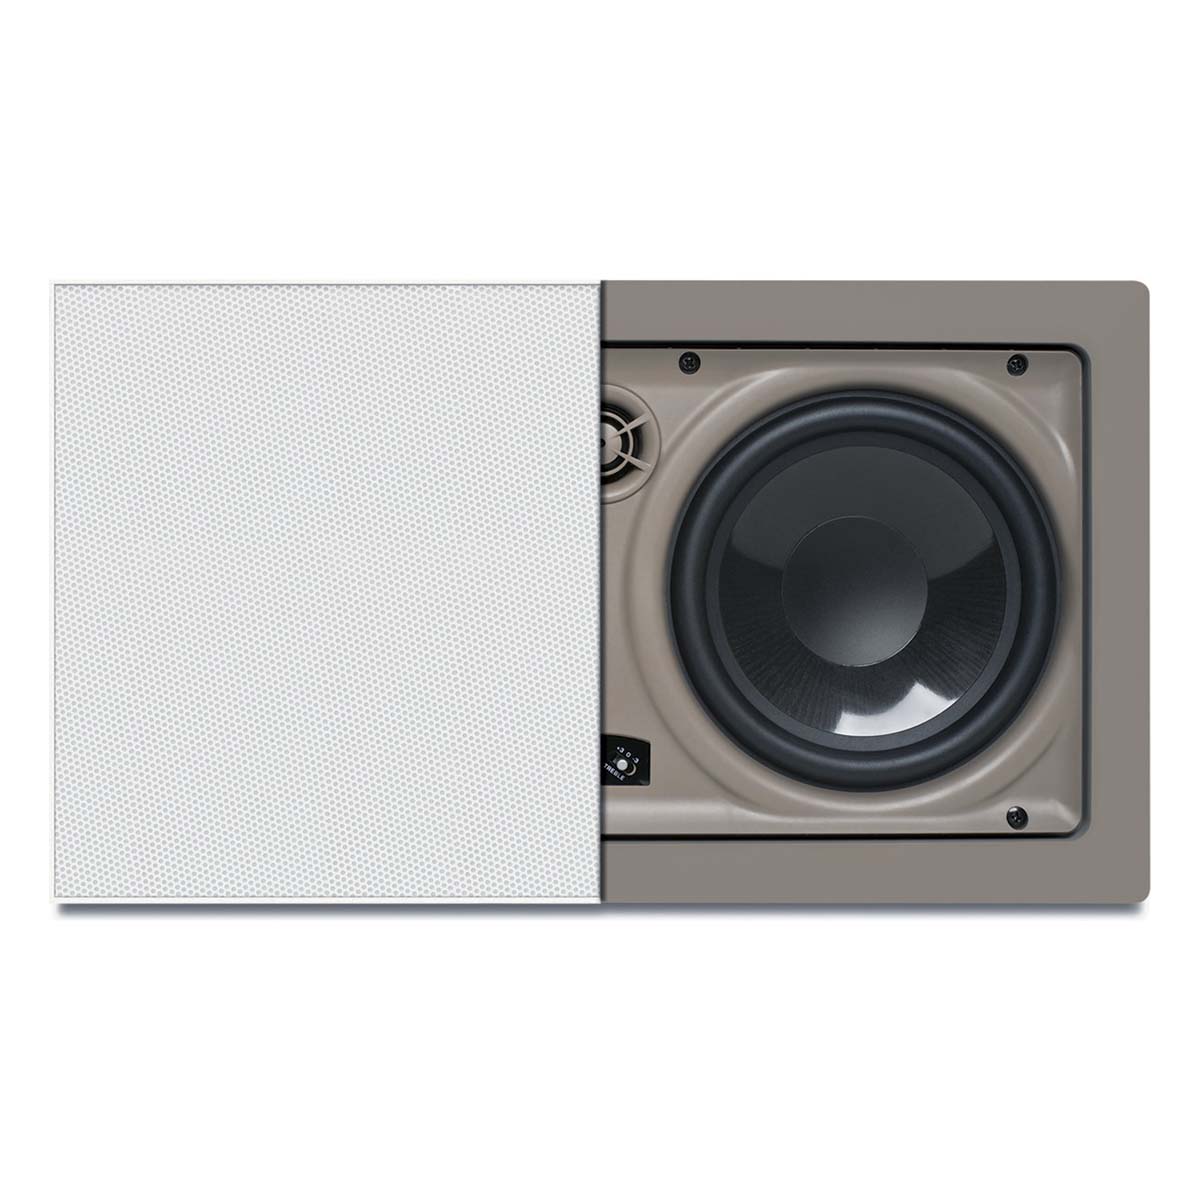 Proficient Audio Protege IW630 In-Wall Speakers